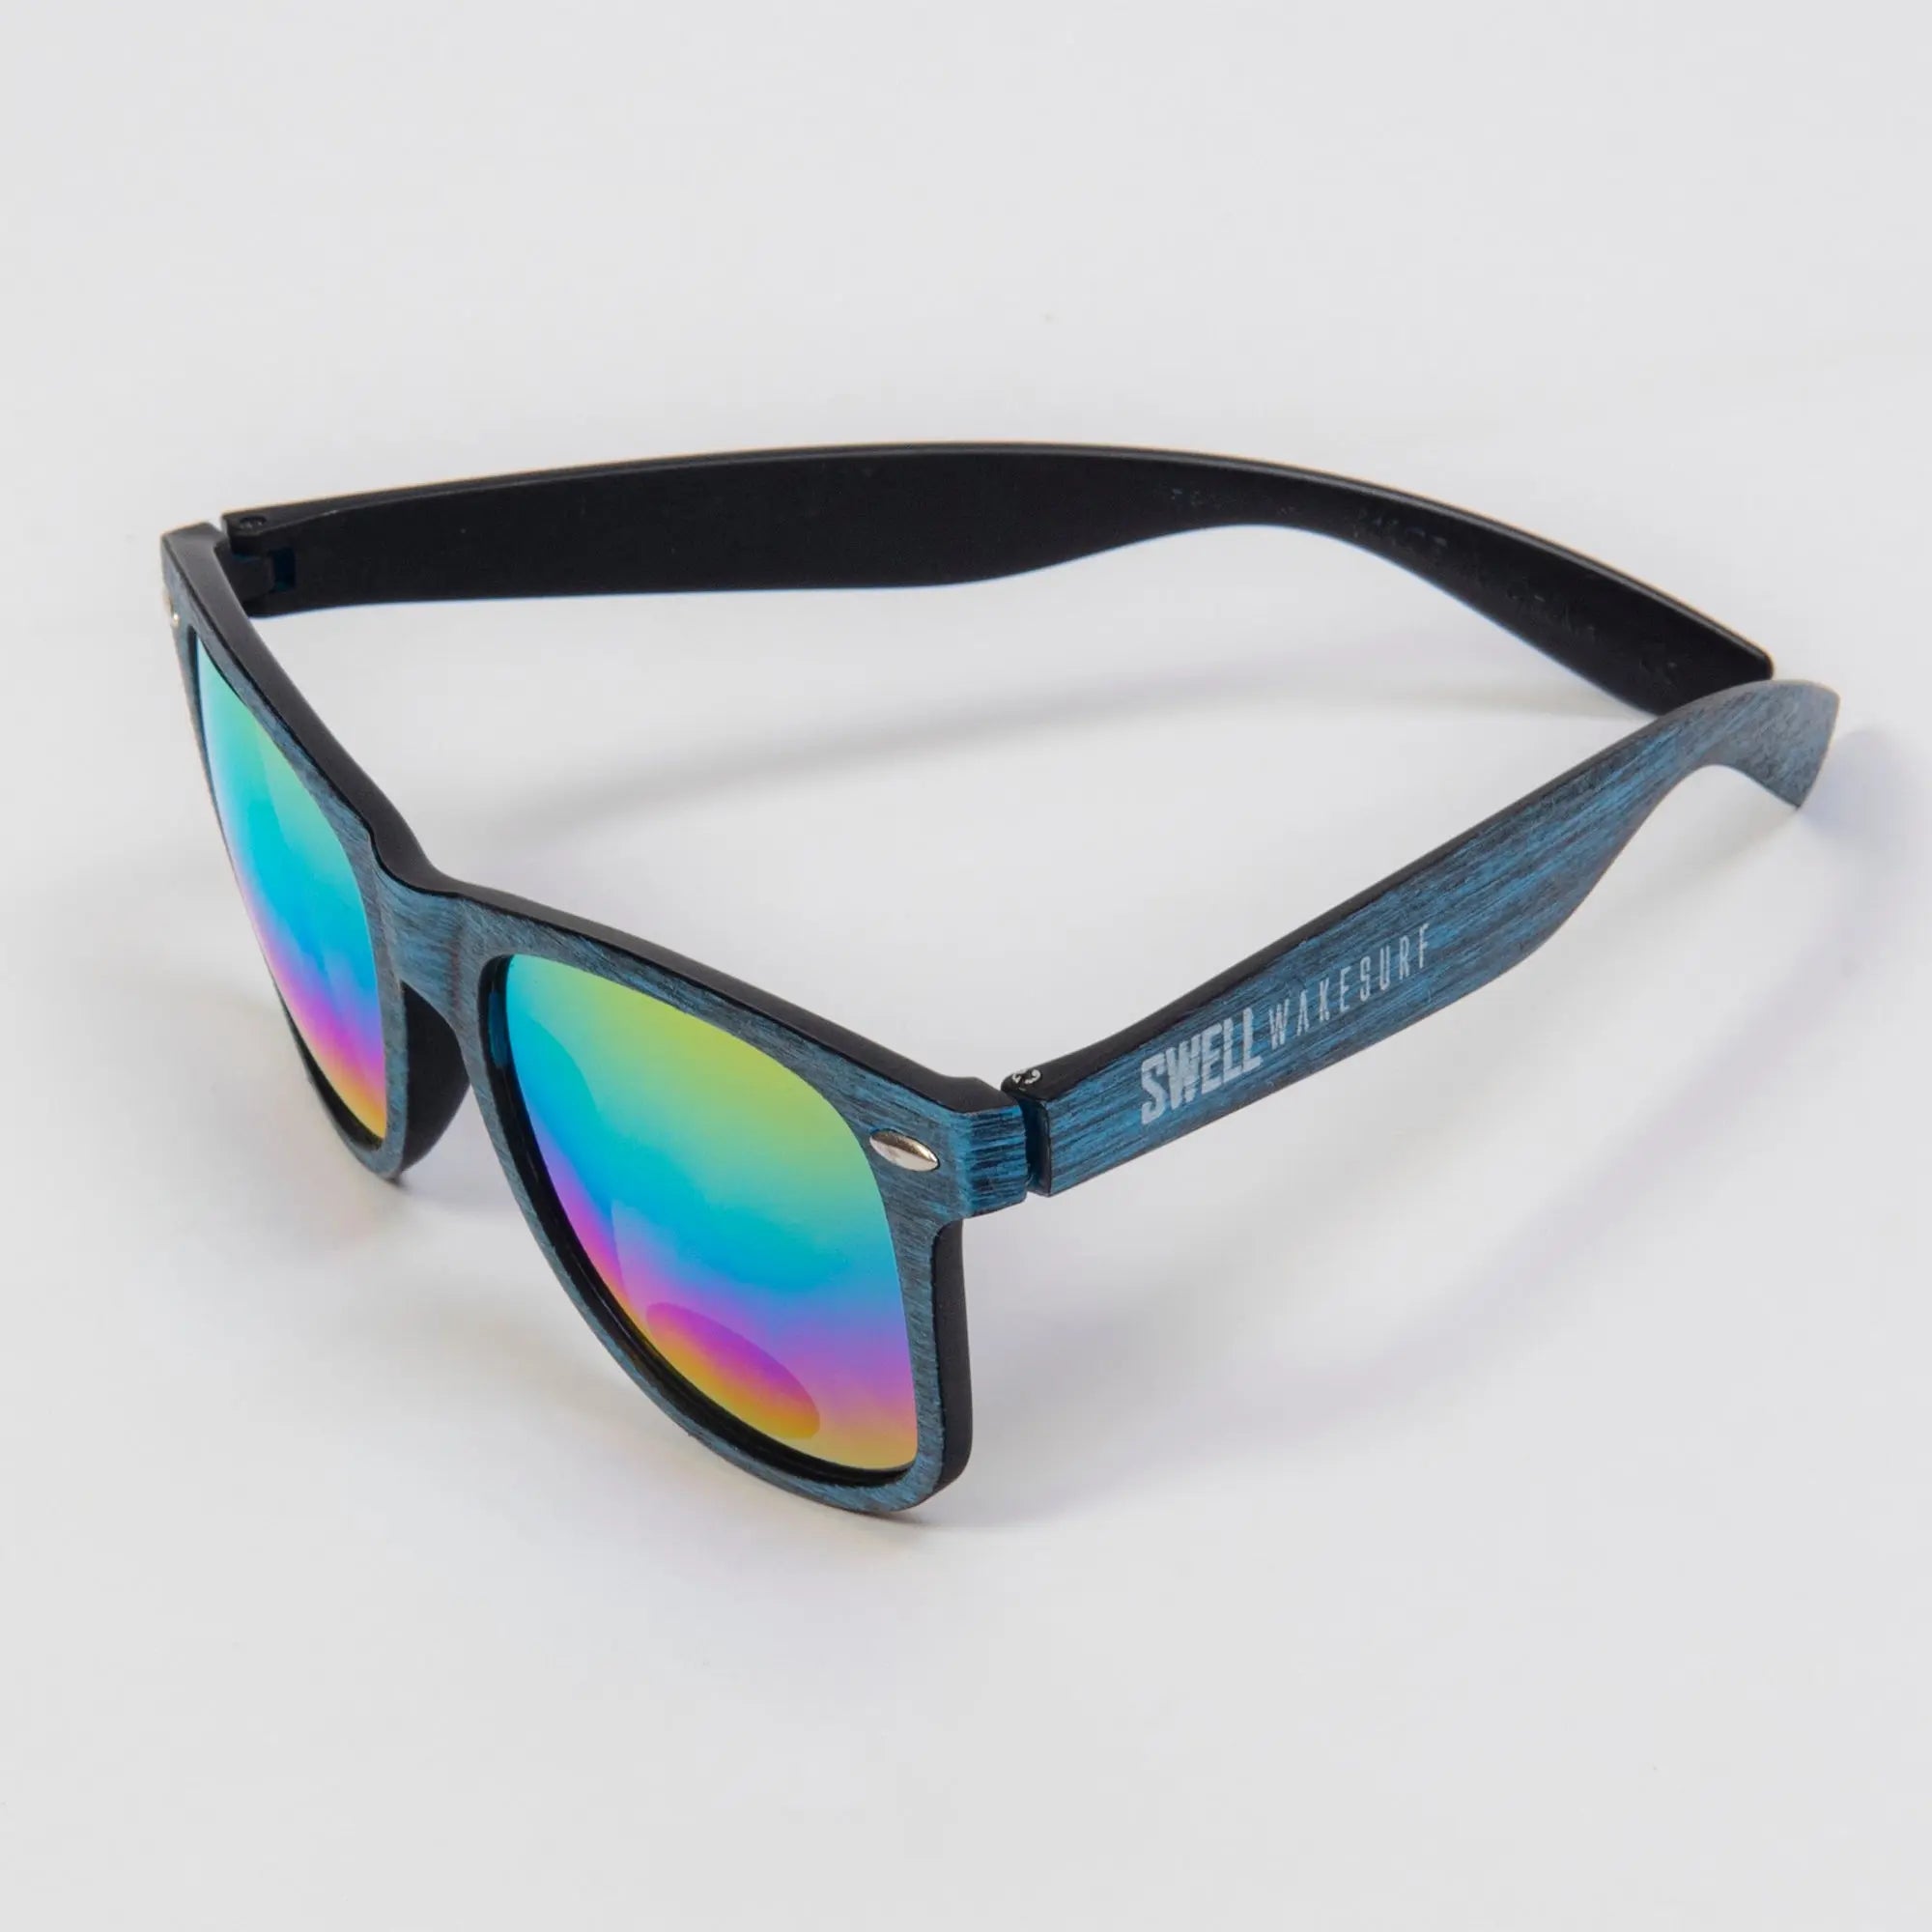 SWELL Wakesurf  - Denim Polarized Sunglasses SWELL Wakesurf